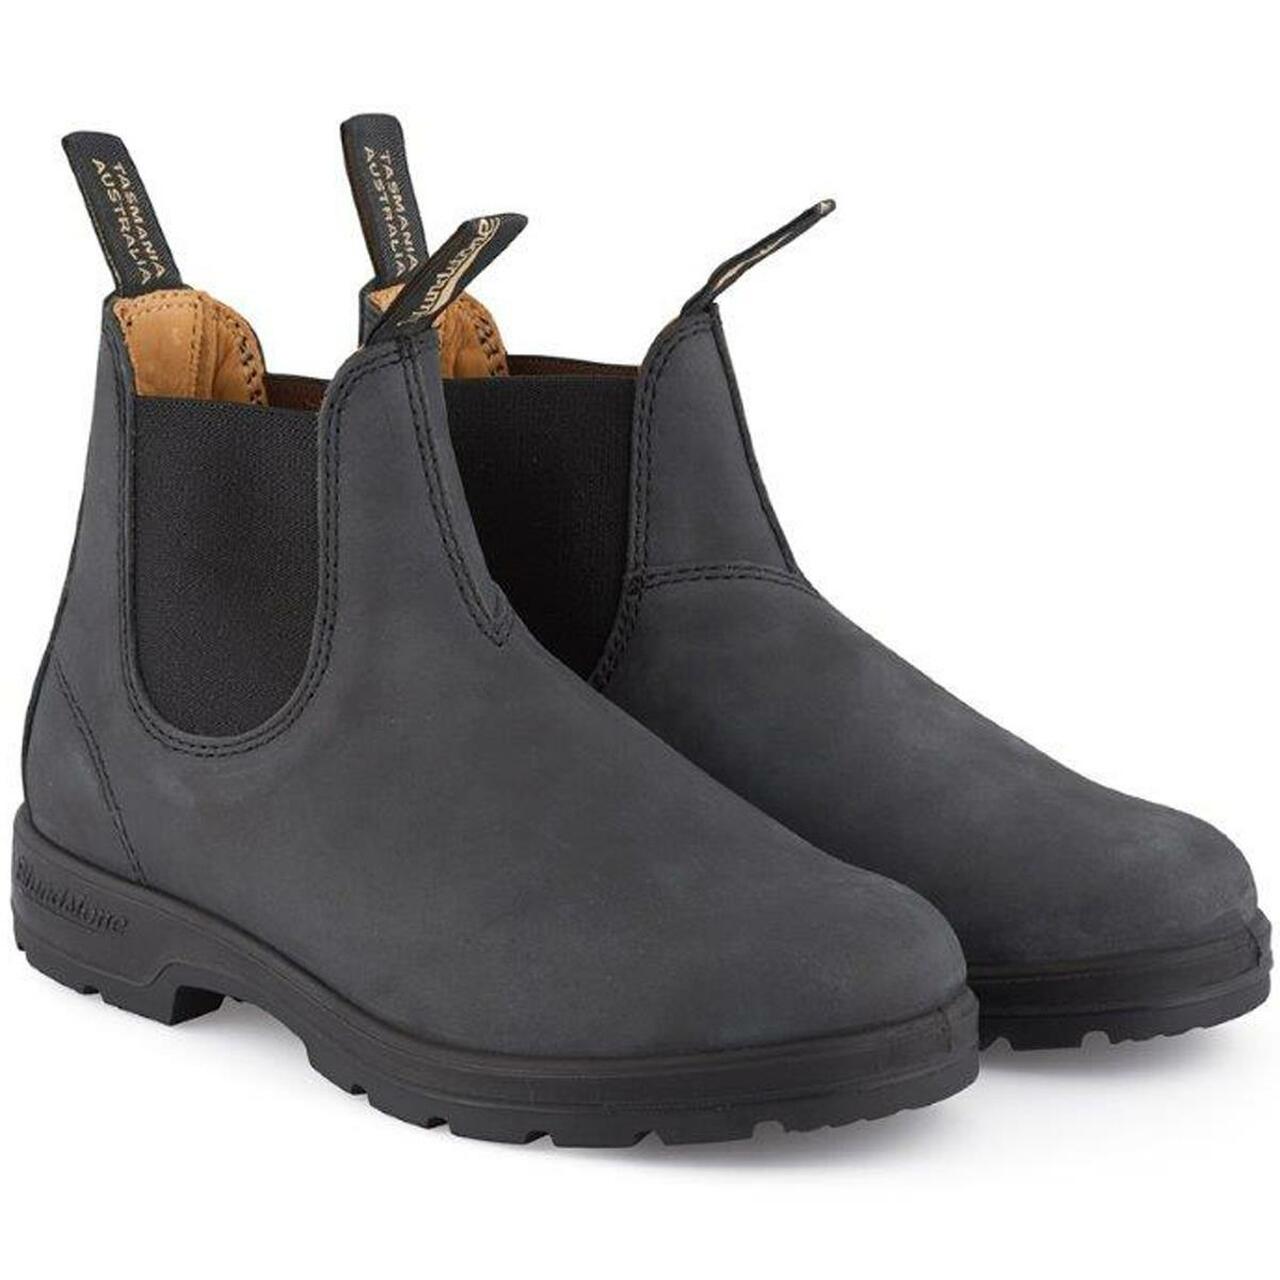 Blundstone 587 Classic Chelsea Boots - Rustic Black